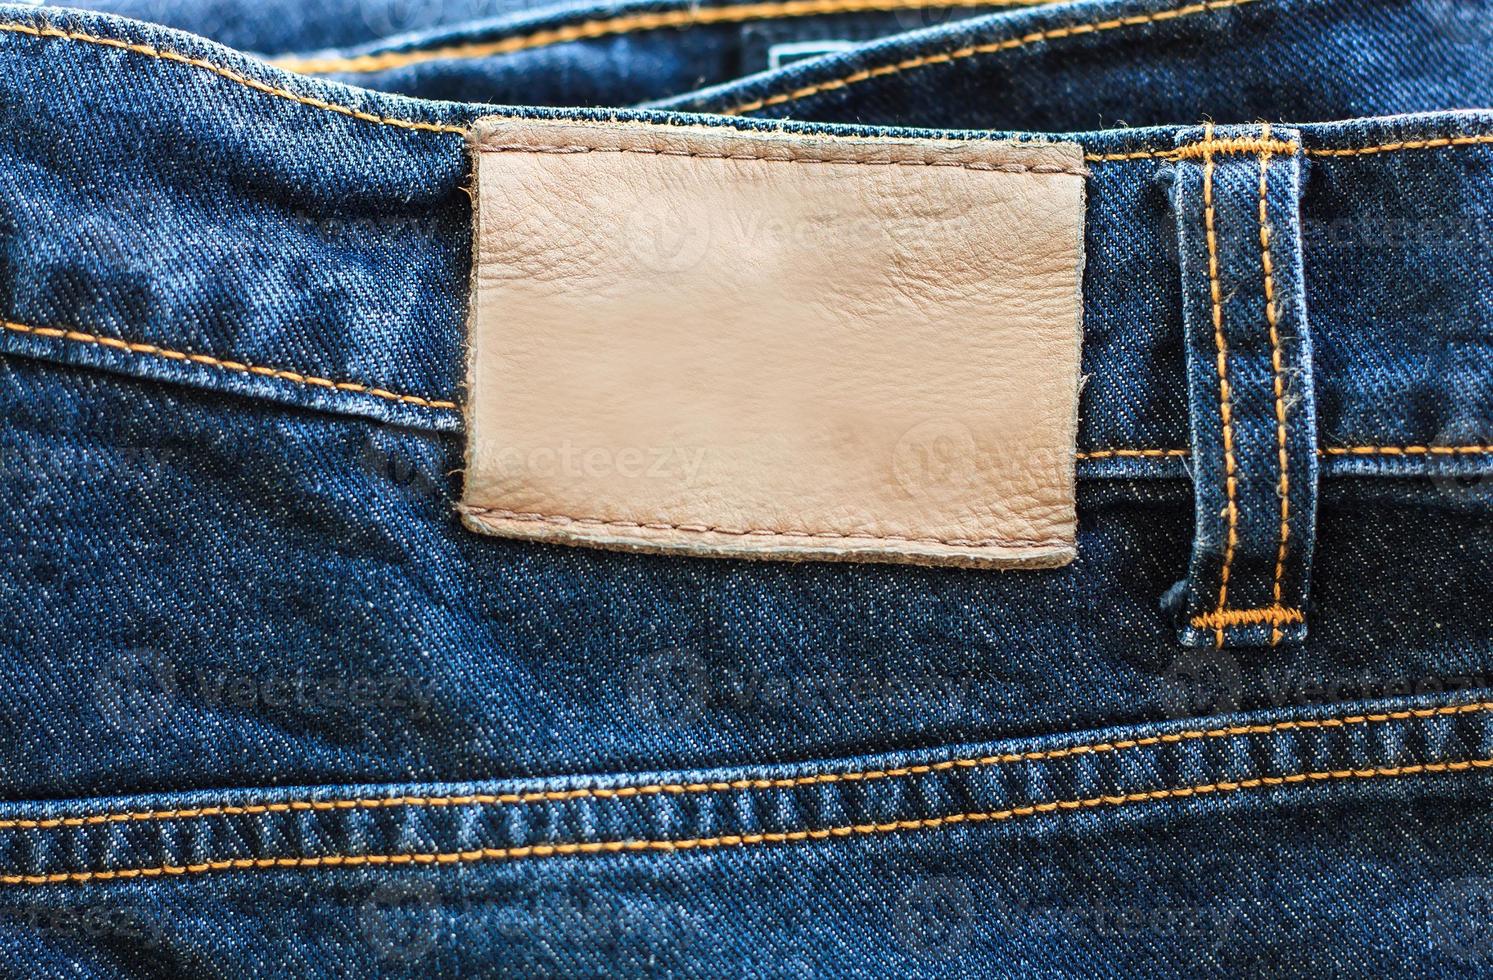 textura de jeans com etiqueta de couro foto